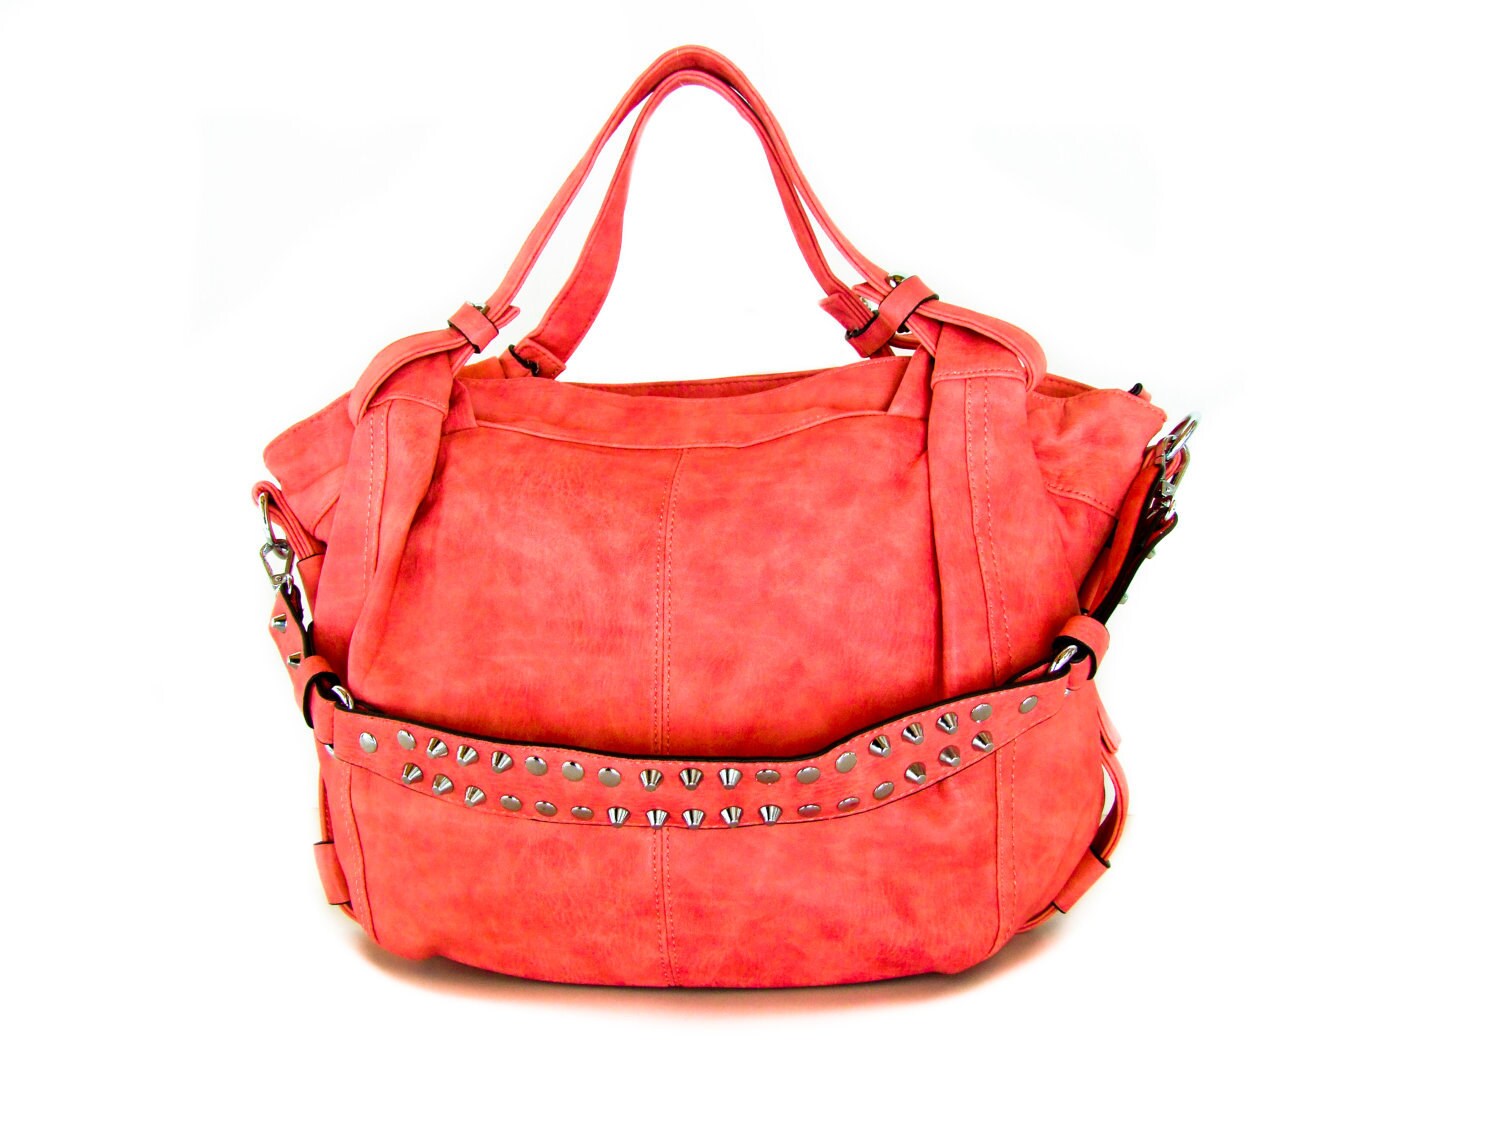 vegan leather handbag purse salmon pink . by VeganLeatherHandbags